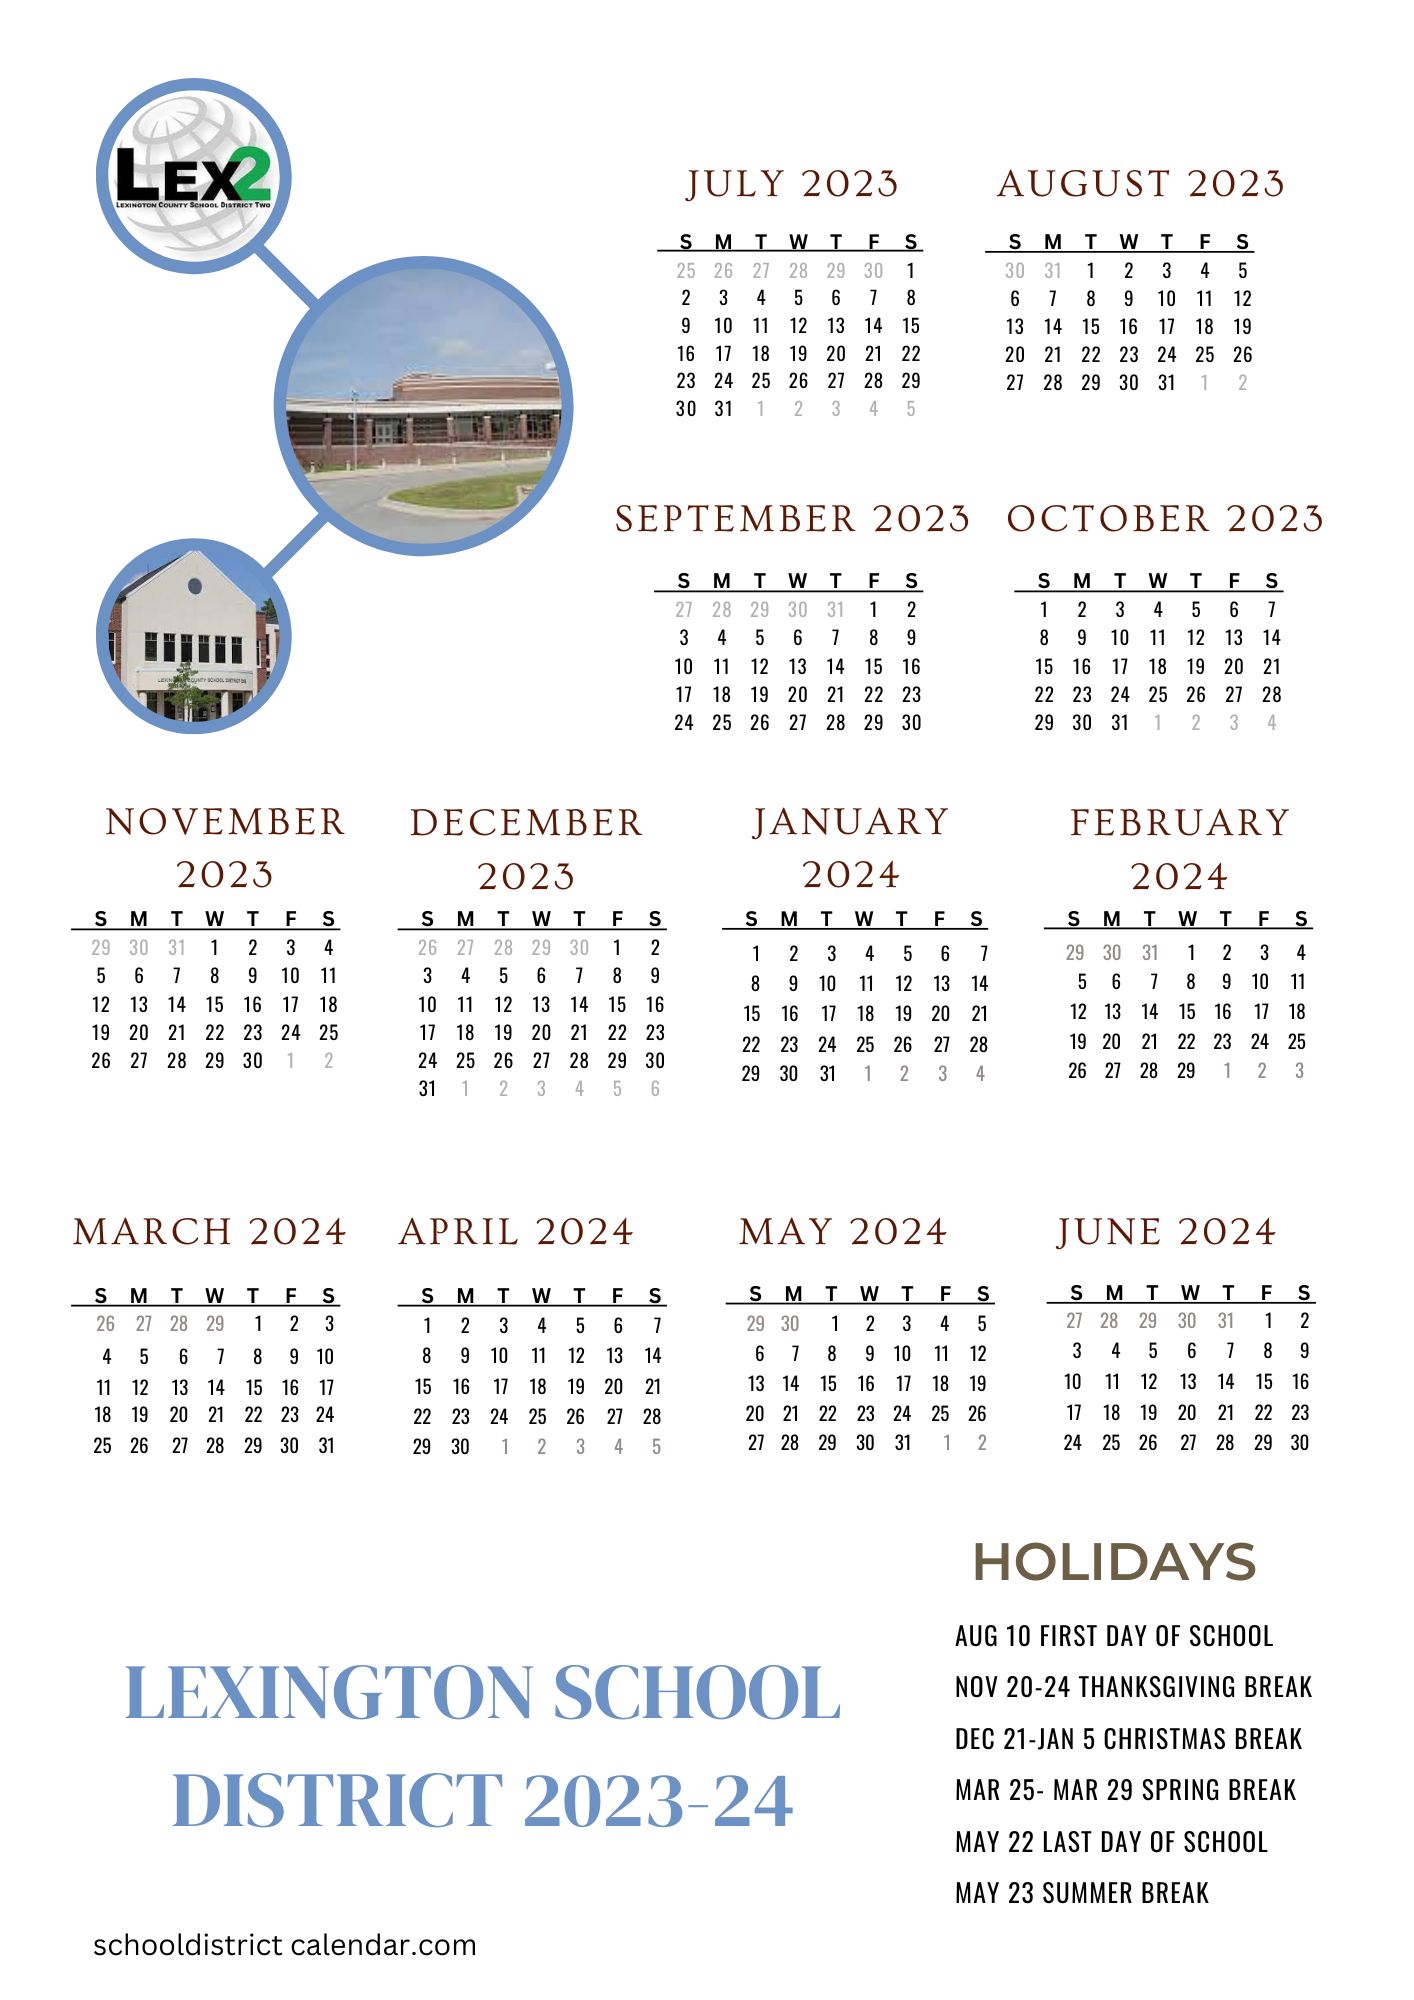 Lexington County School District 1 Calendar Holidays 20232024